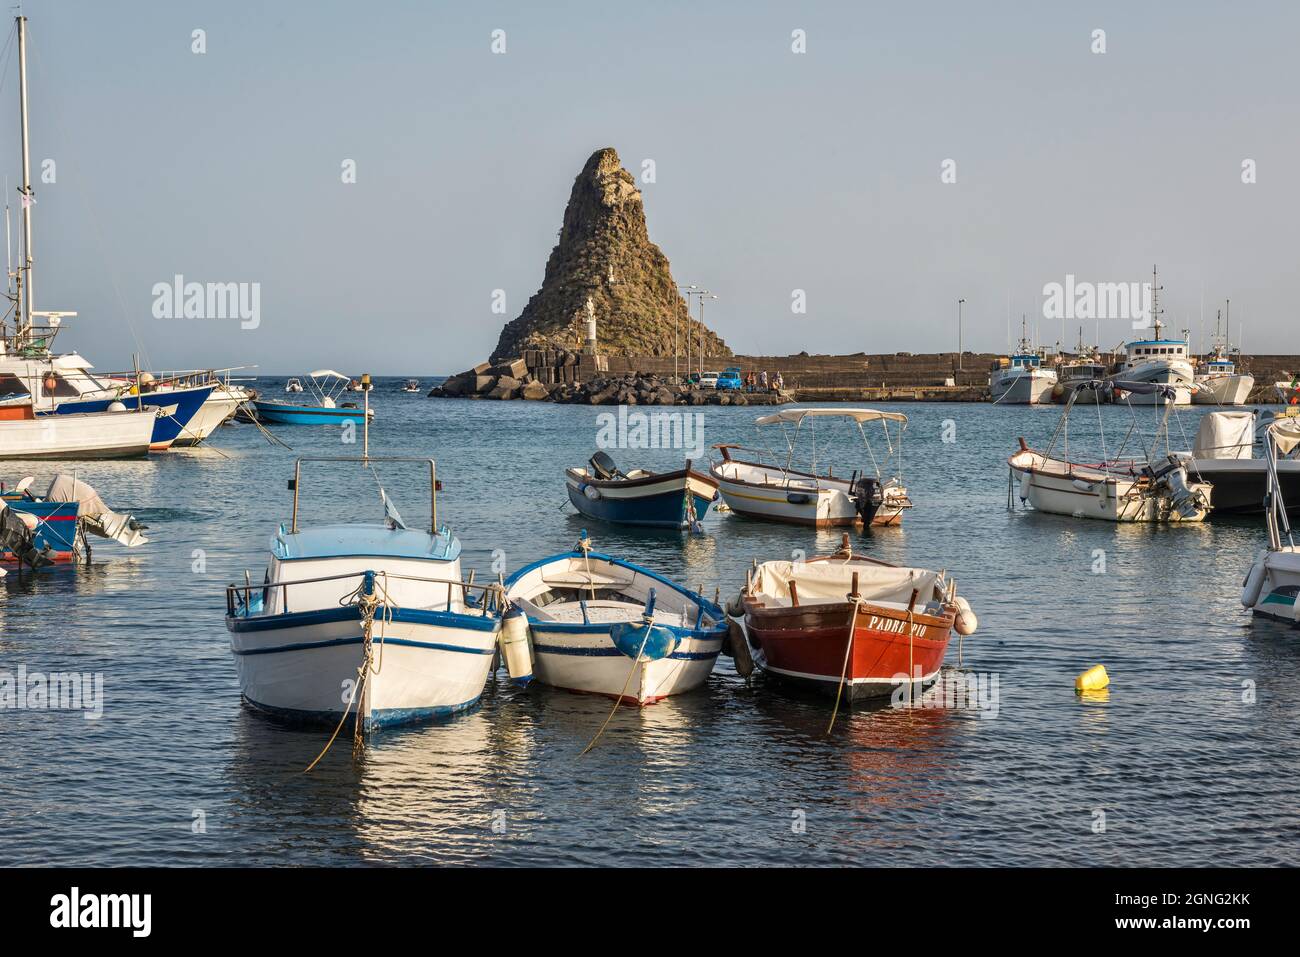 The harbour of Aci Trezza, Sicily, with the basalt sea stack of Faraglione Grande, one of the Faraglioni or Isole dei Ciclopi (Cyclopean Islands) Stock Photo